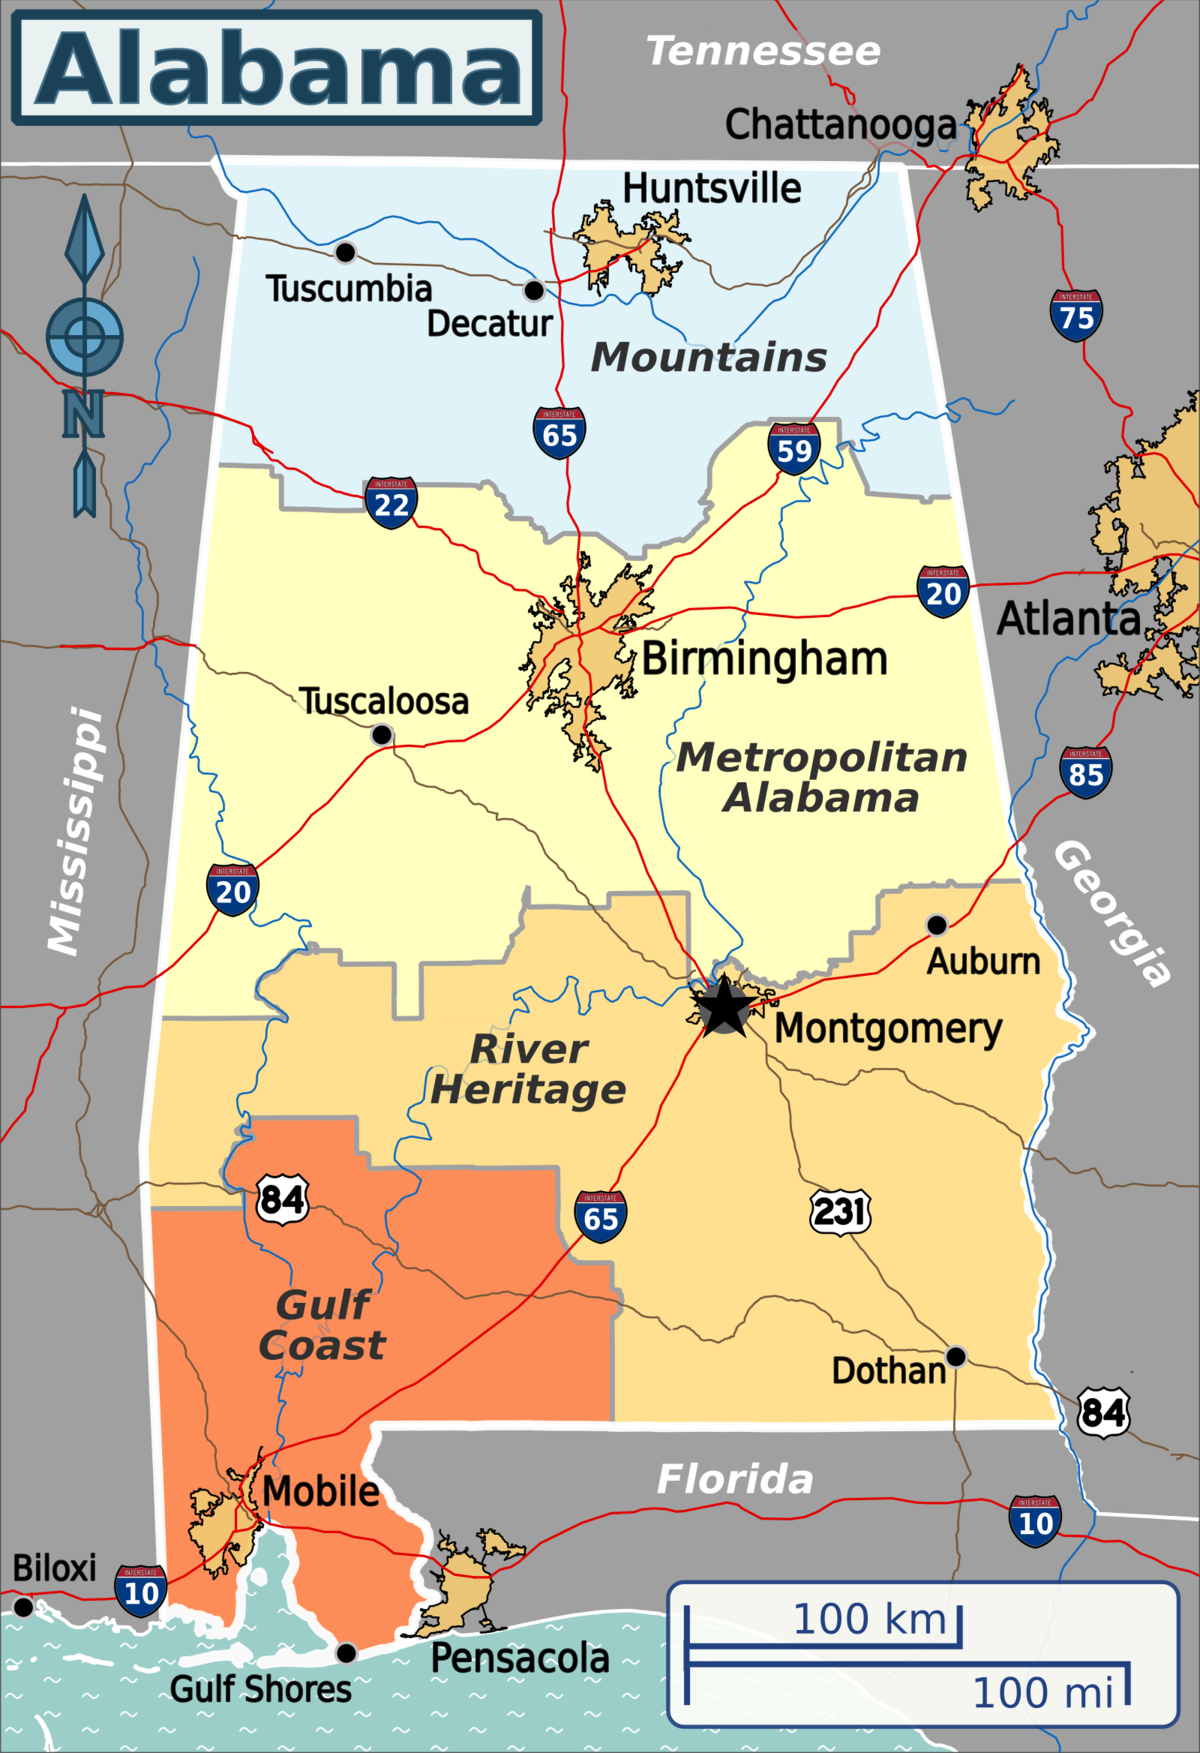 Alabama – Travel guide at Wikivoyage